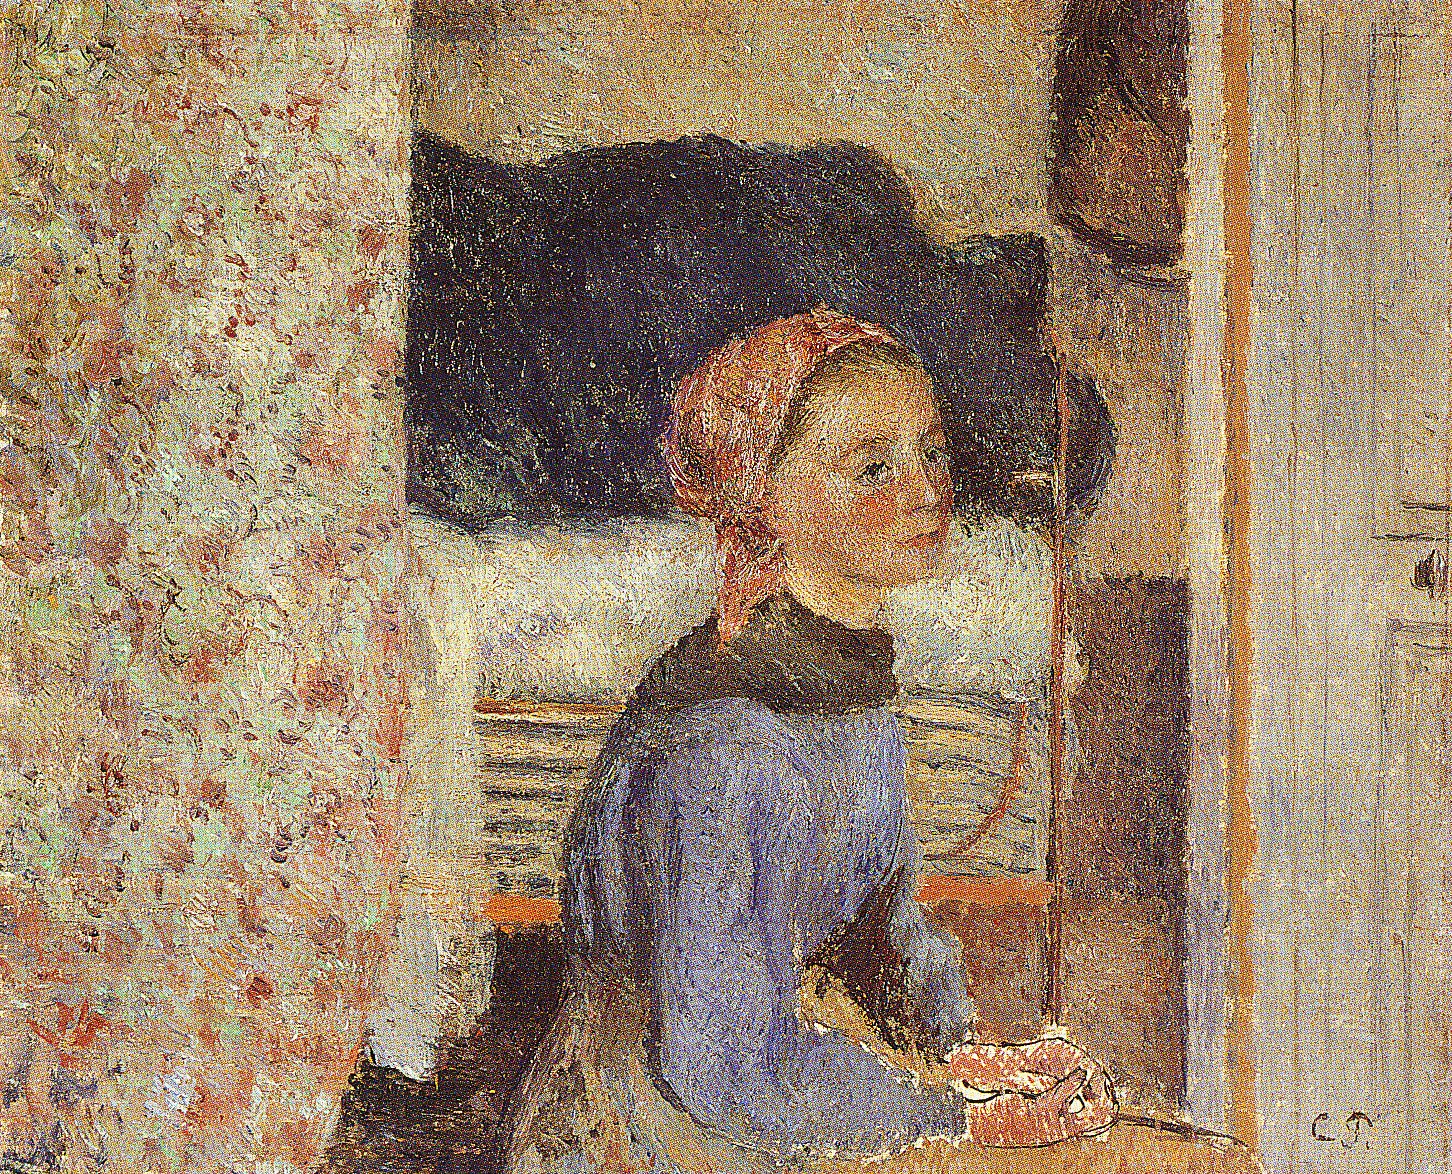 Camille+Pissarro-1830-1903 (332).jpg